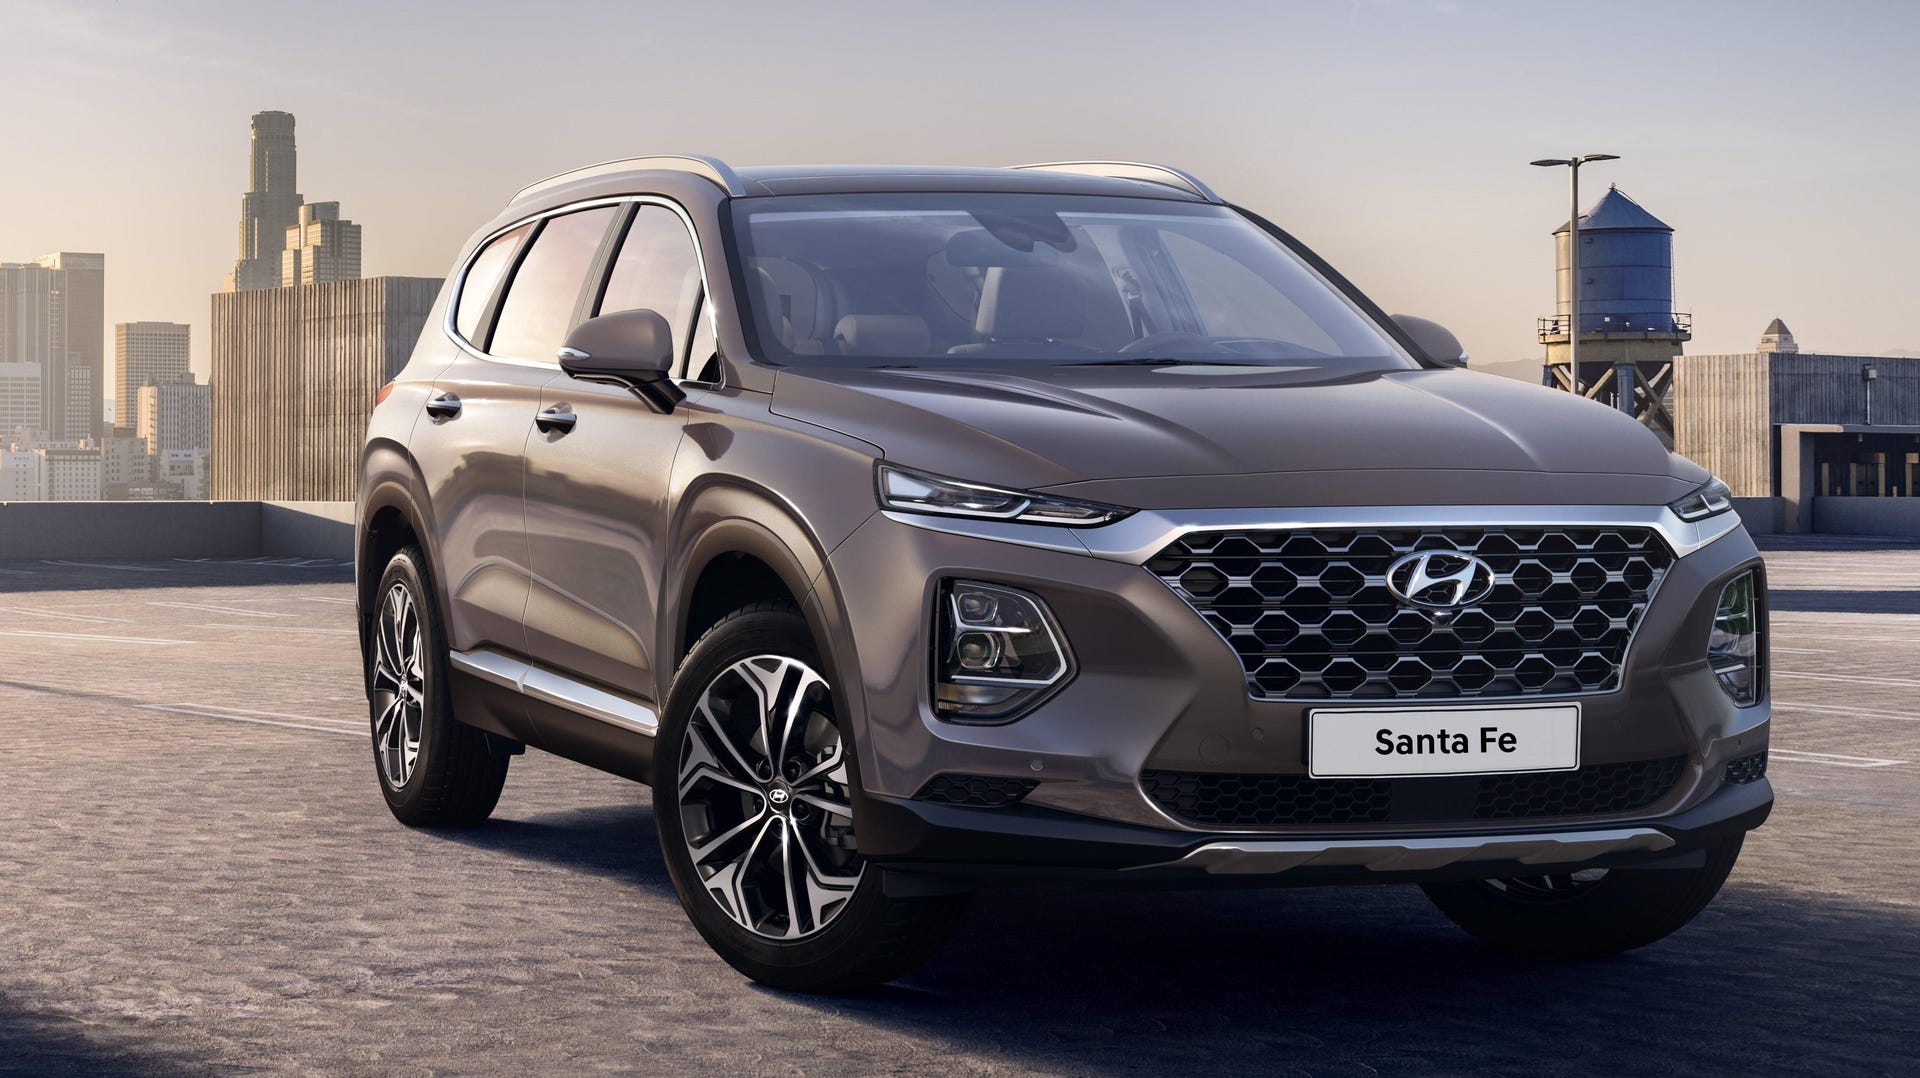 2019 Hyundai Santa Fe front three-quarter view